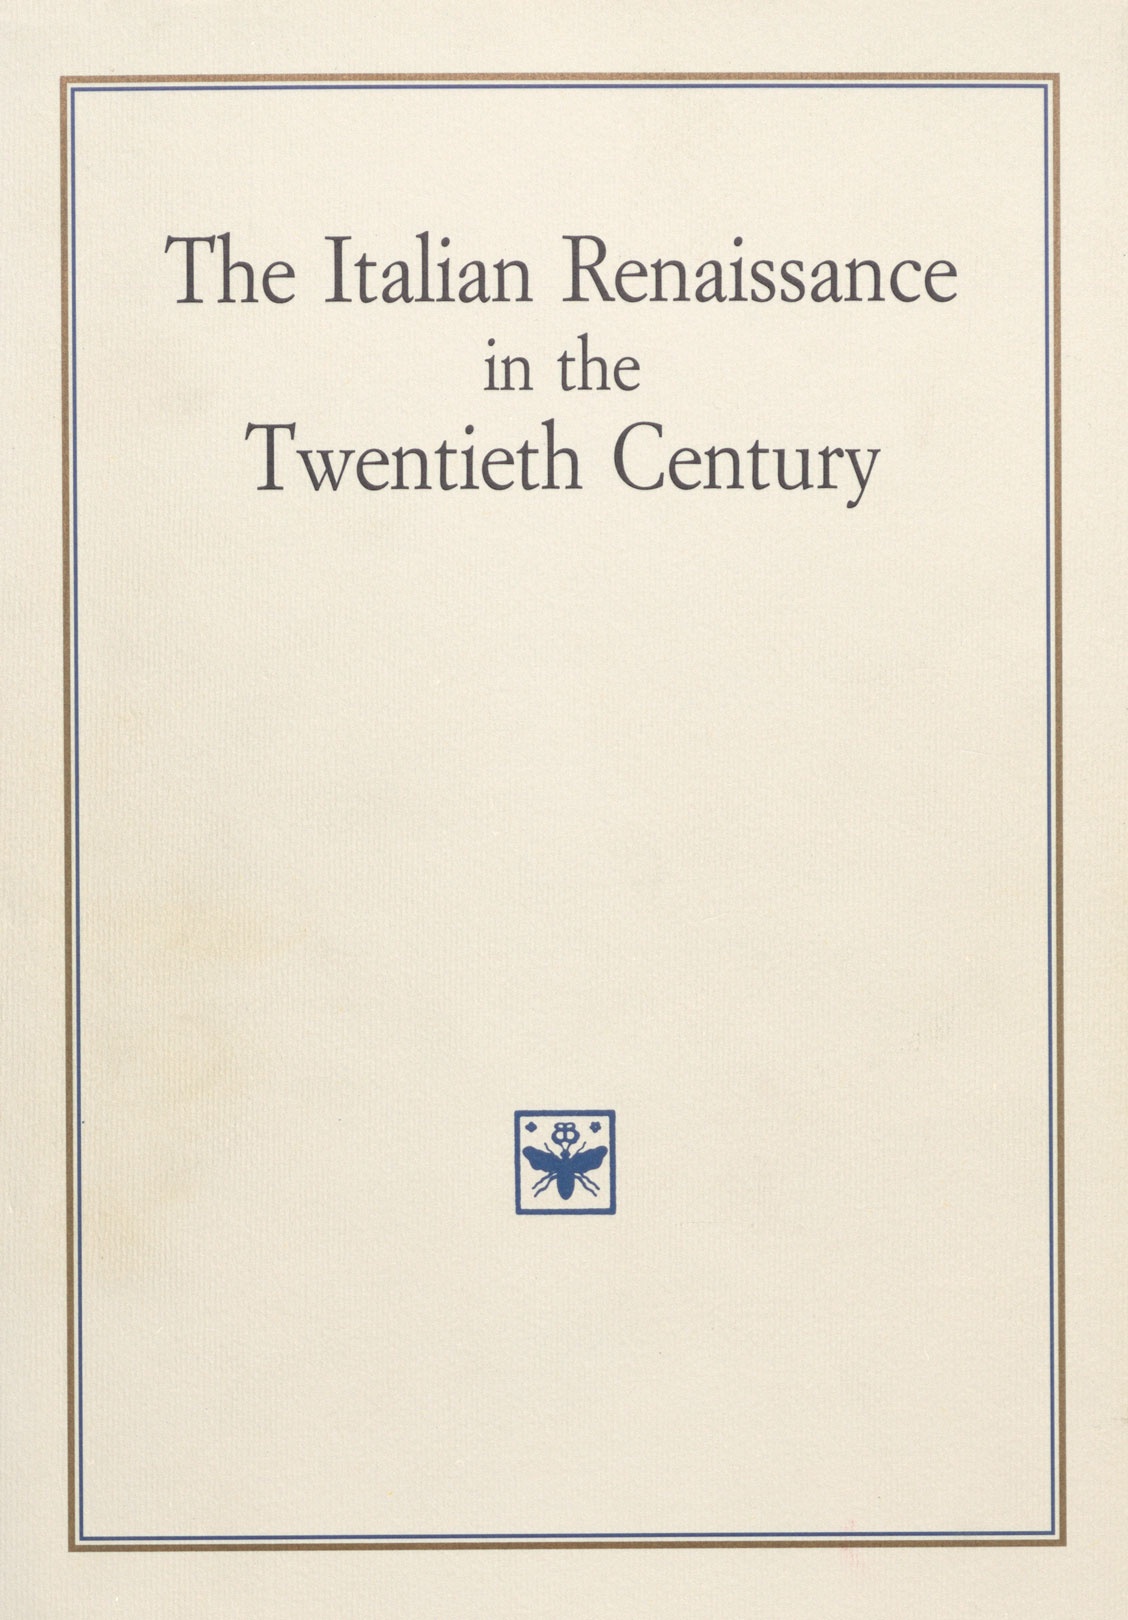 The Italian Renaissance in the Twentieth Century